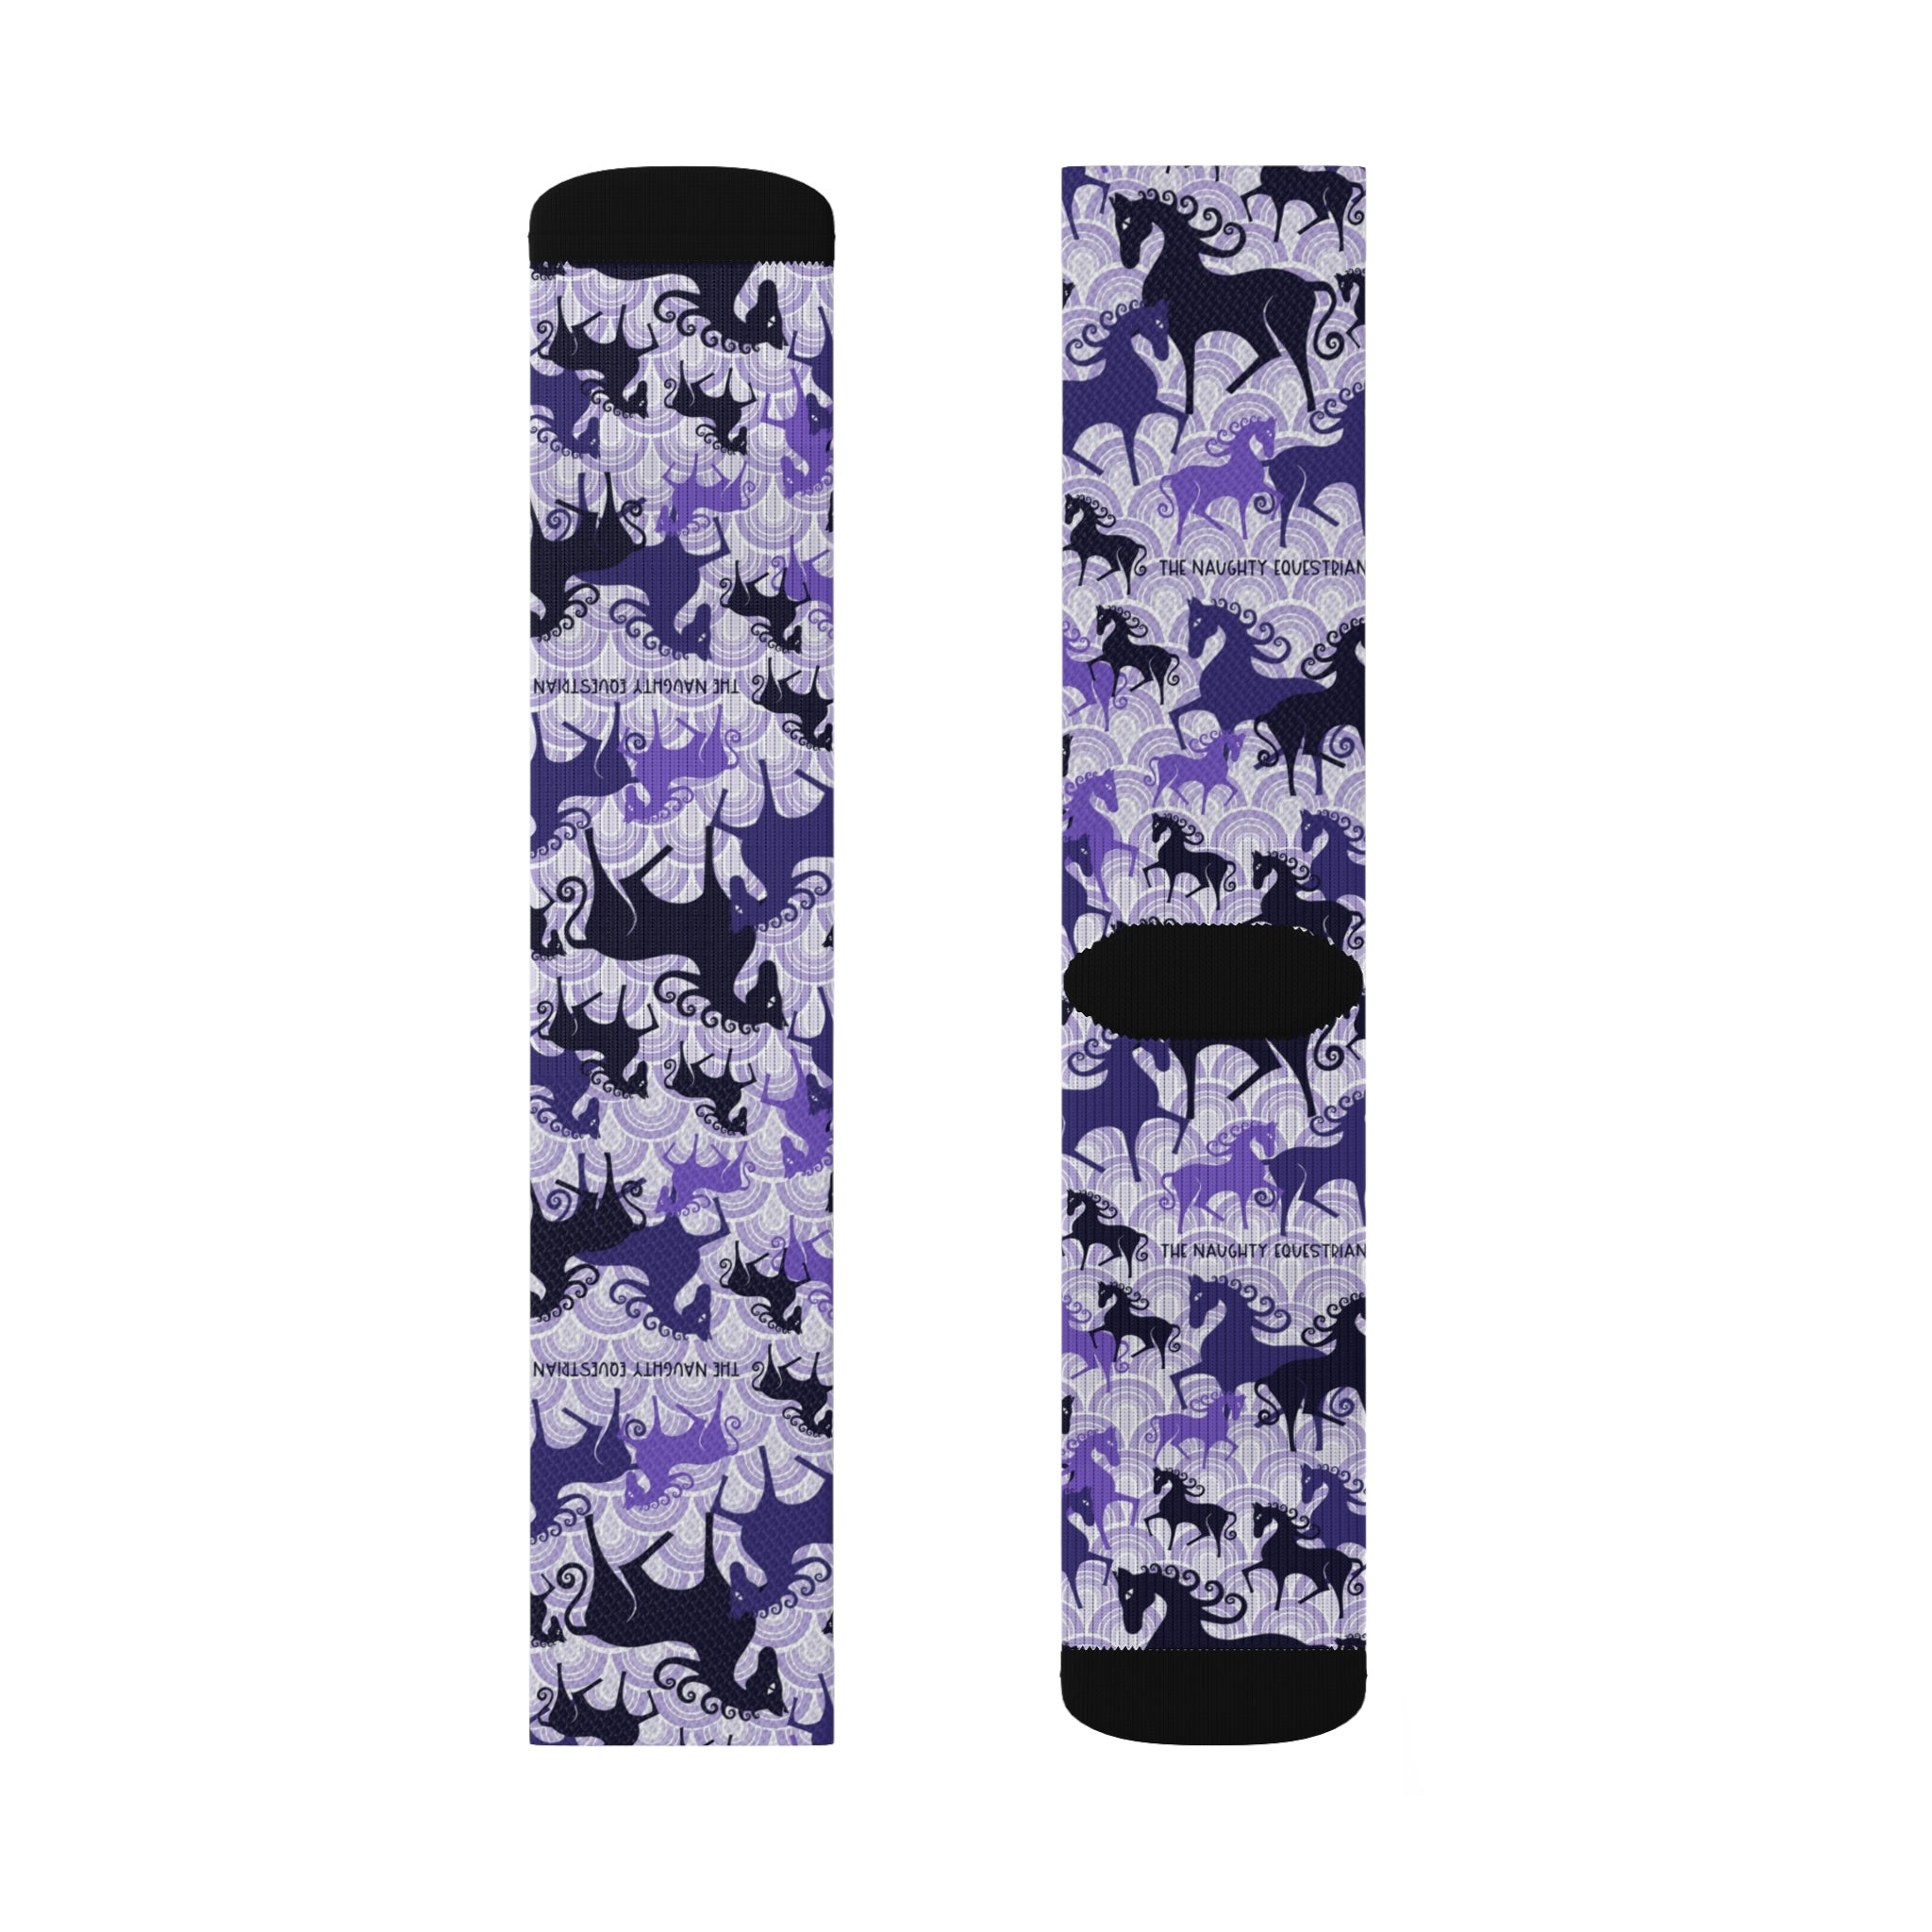 Atomic Horse Purple Socks